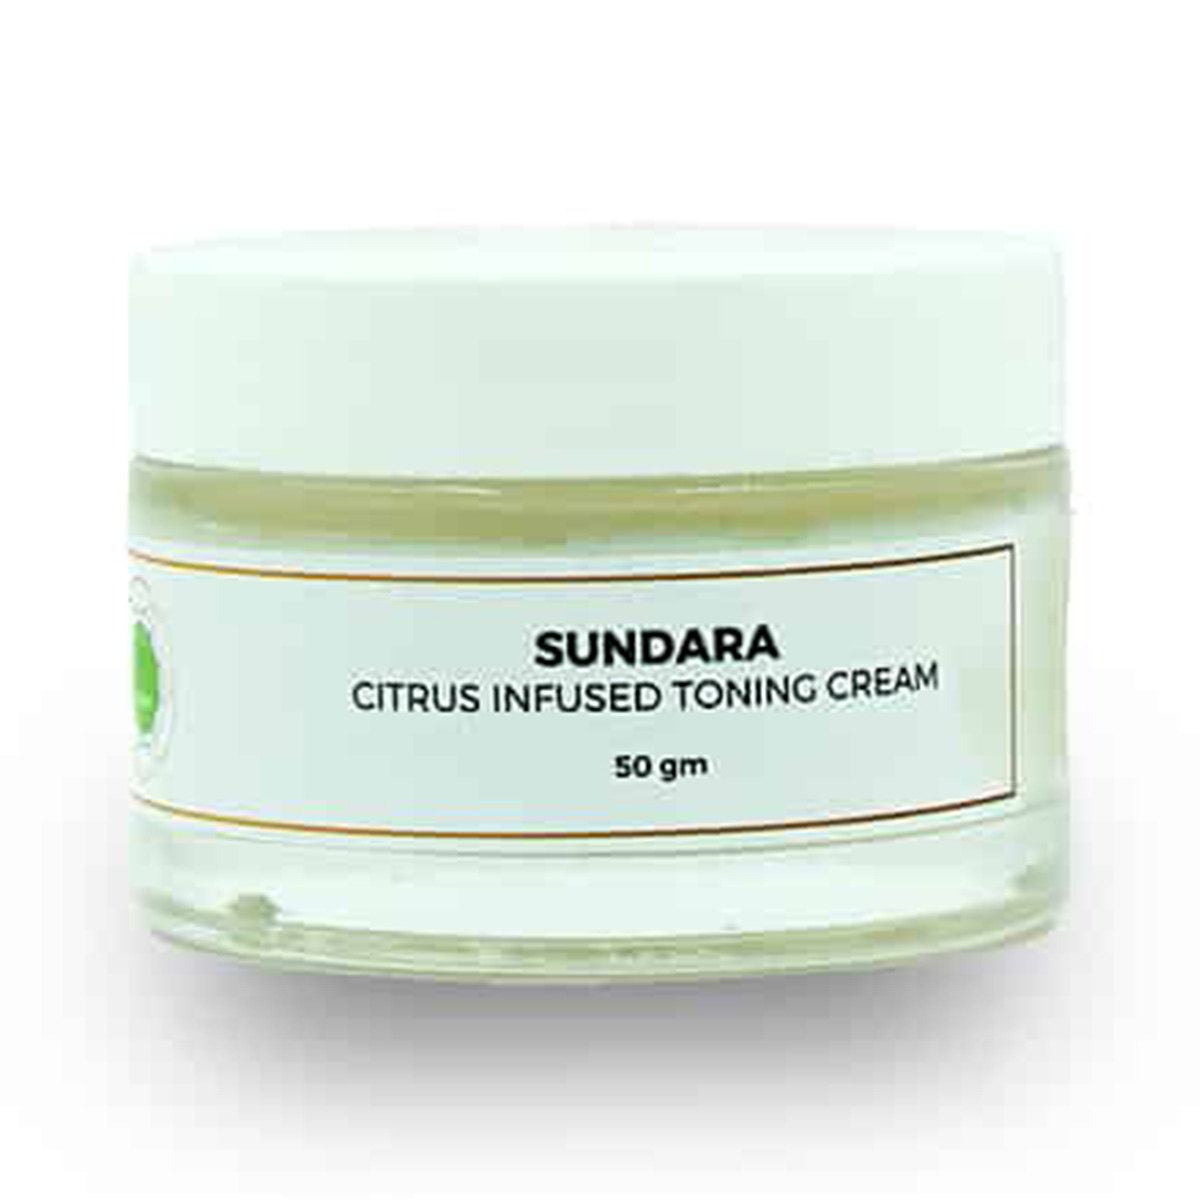 Anahata Sundara Citrus Infused Toning Face Cream, 50gm